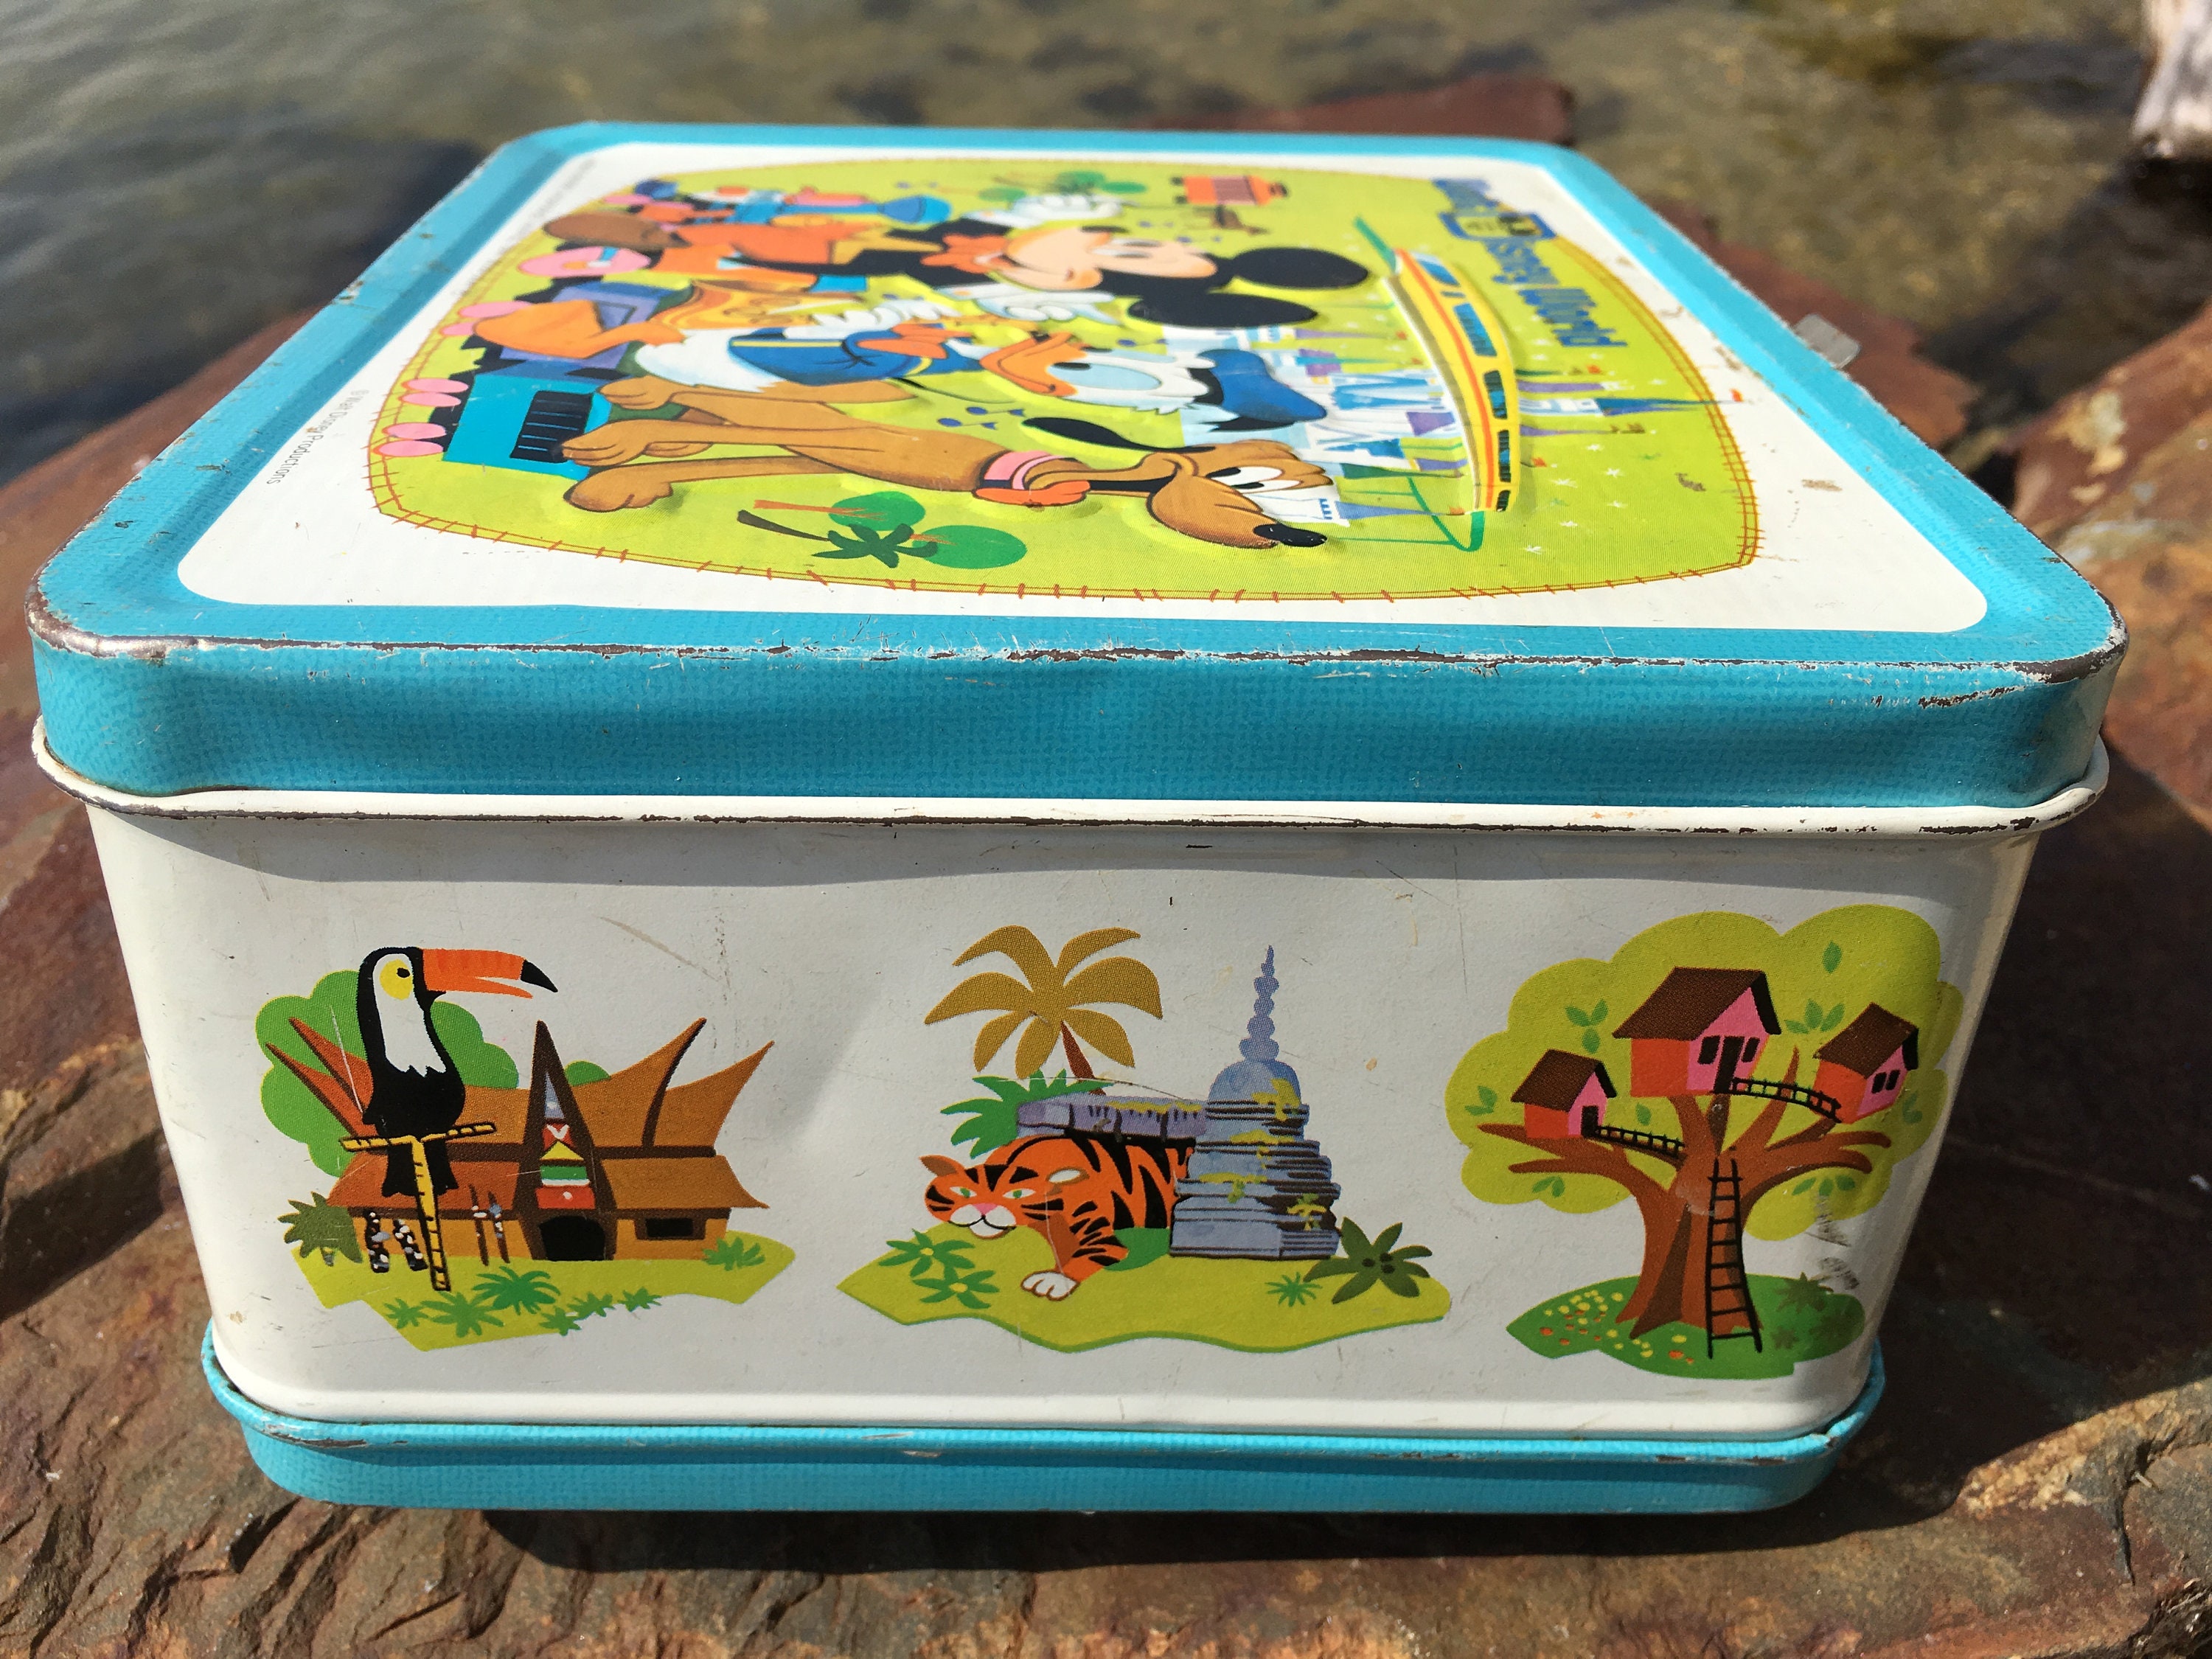 1973 Walt Disney World Lunchbox Metal Aladdin Vintage Collectible 